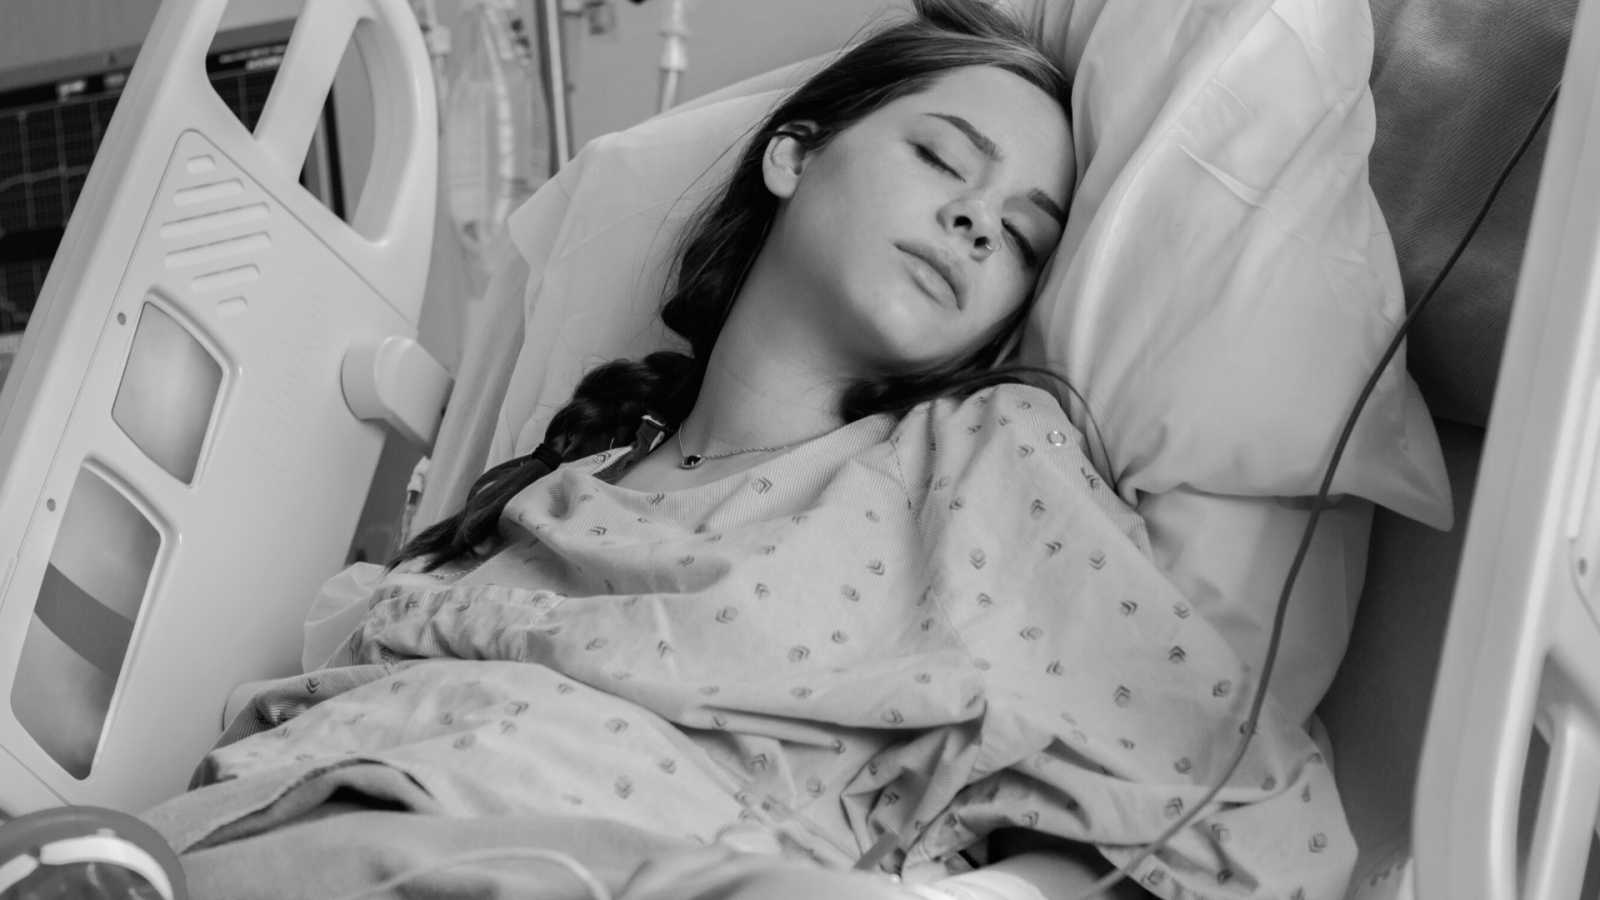 woman sleeping in hospital bed